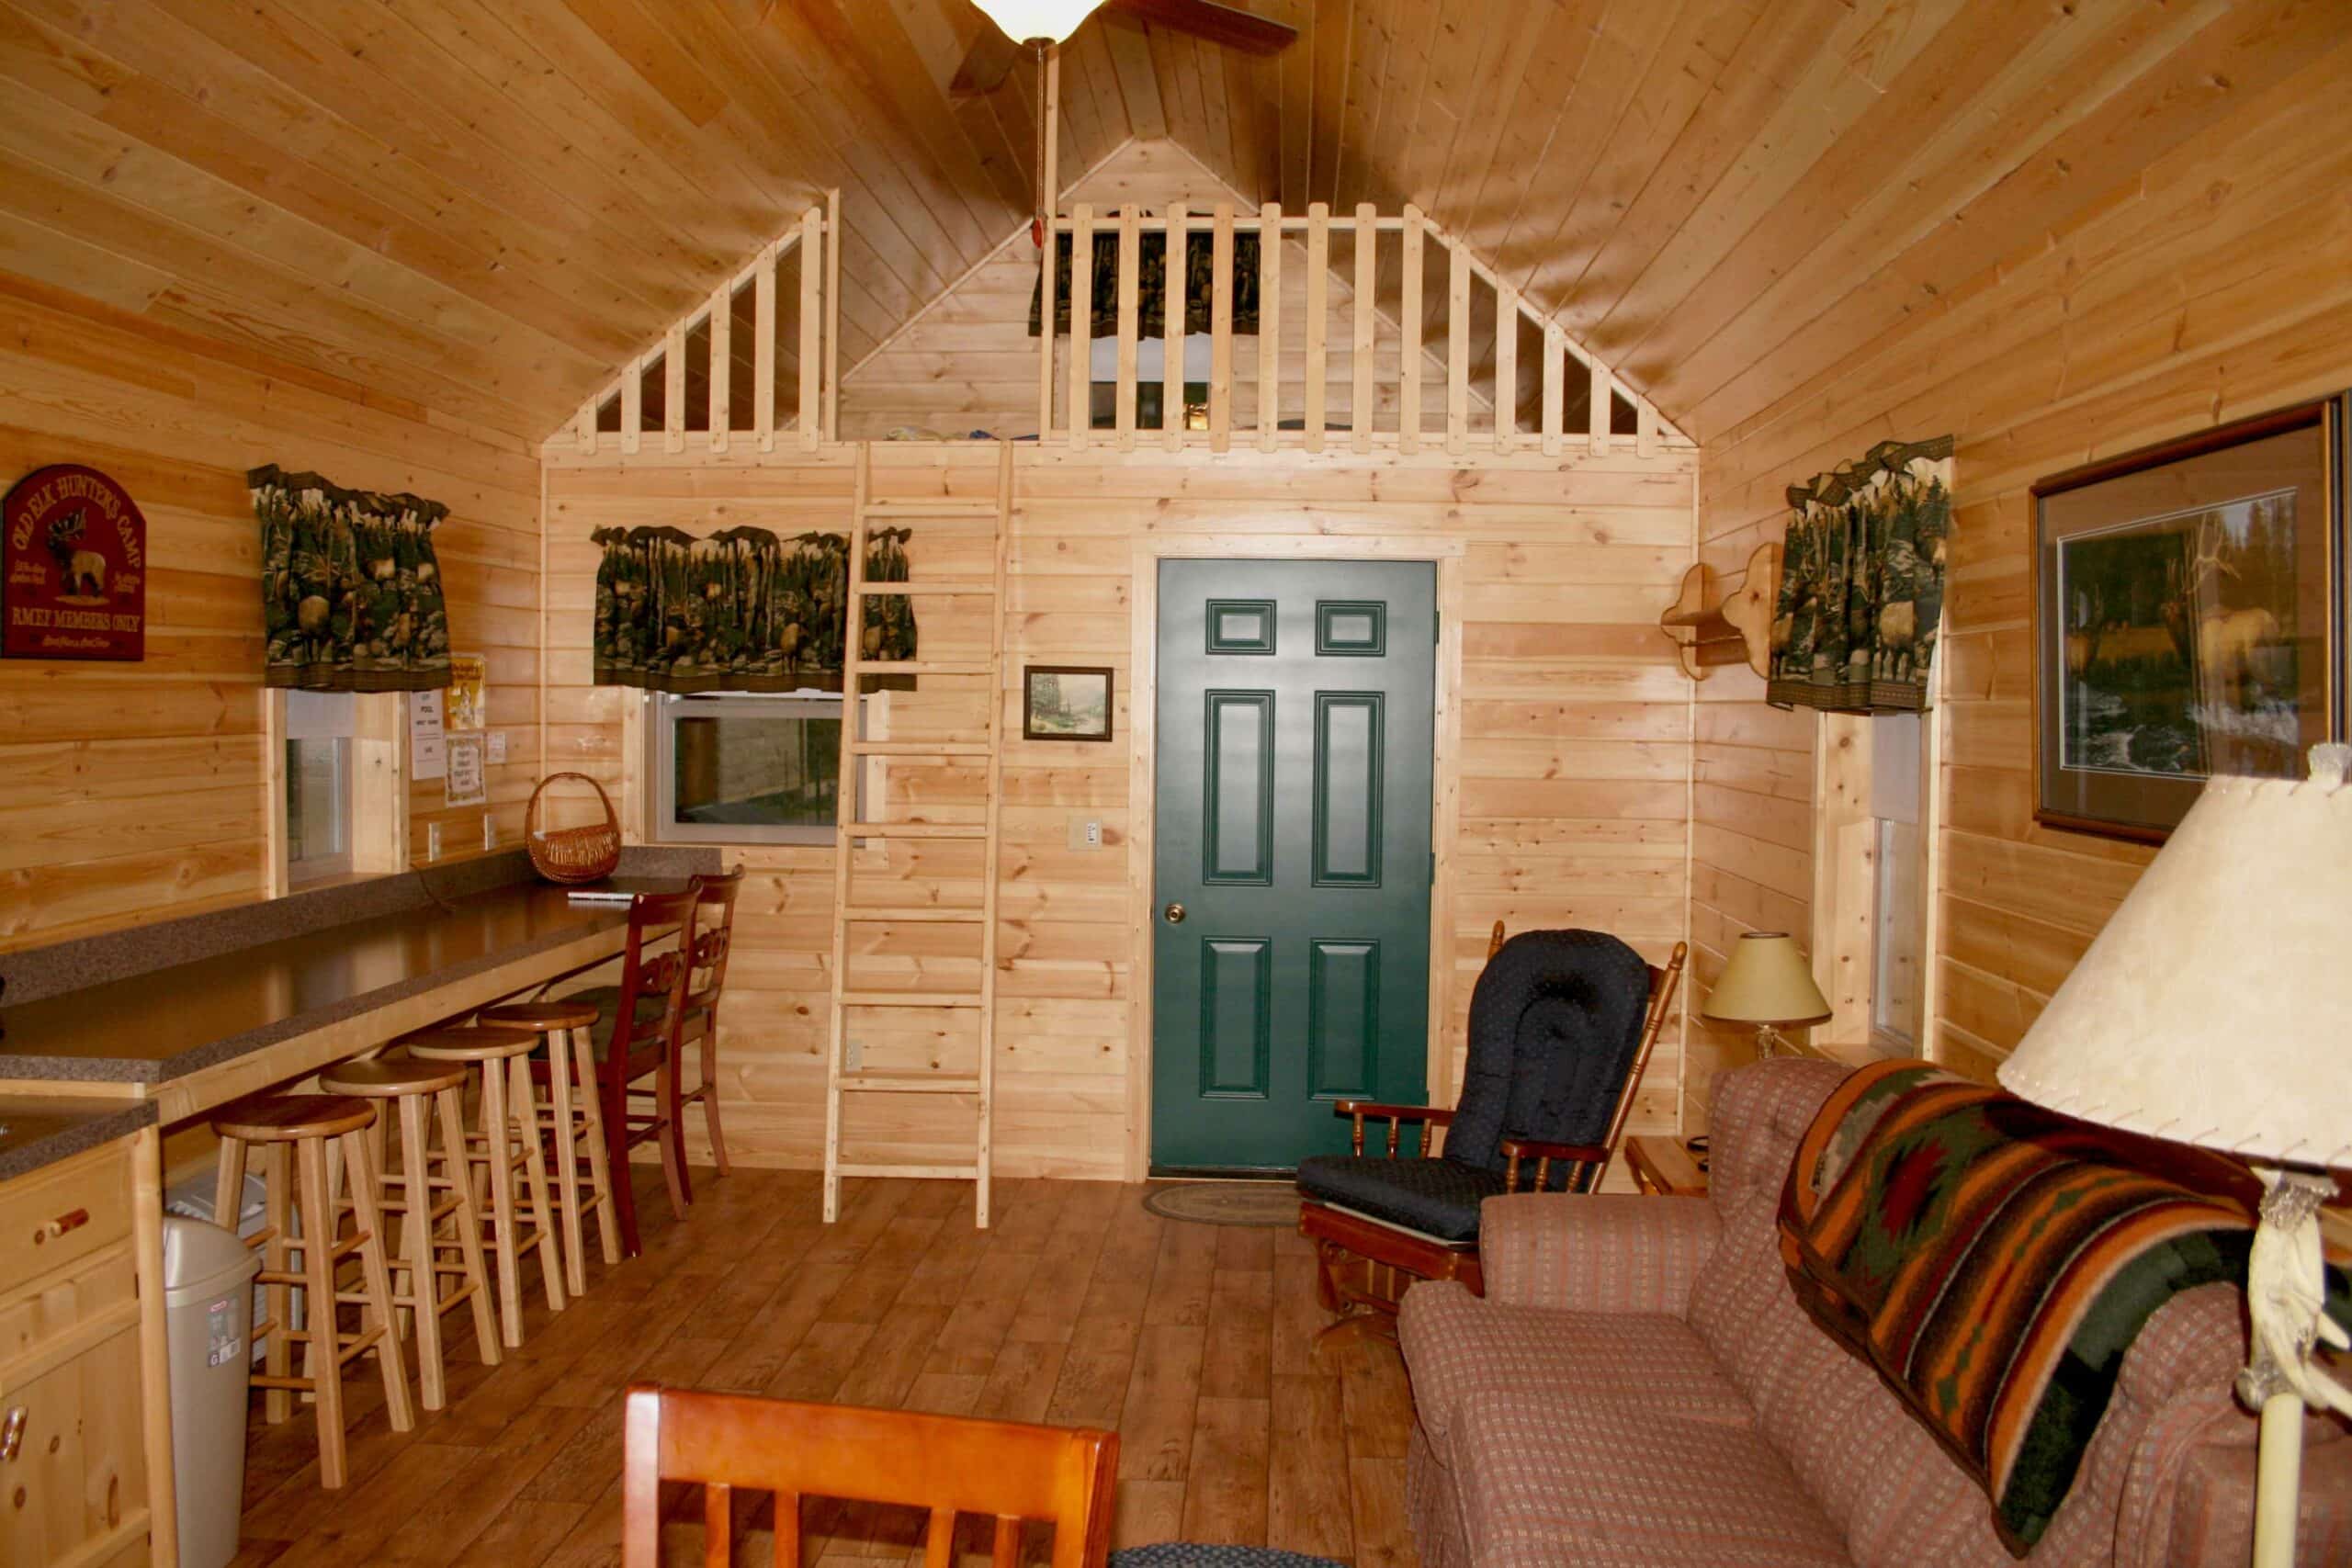 adirondack cabin